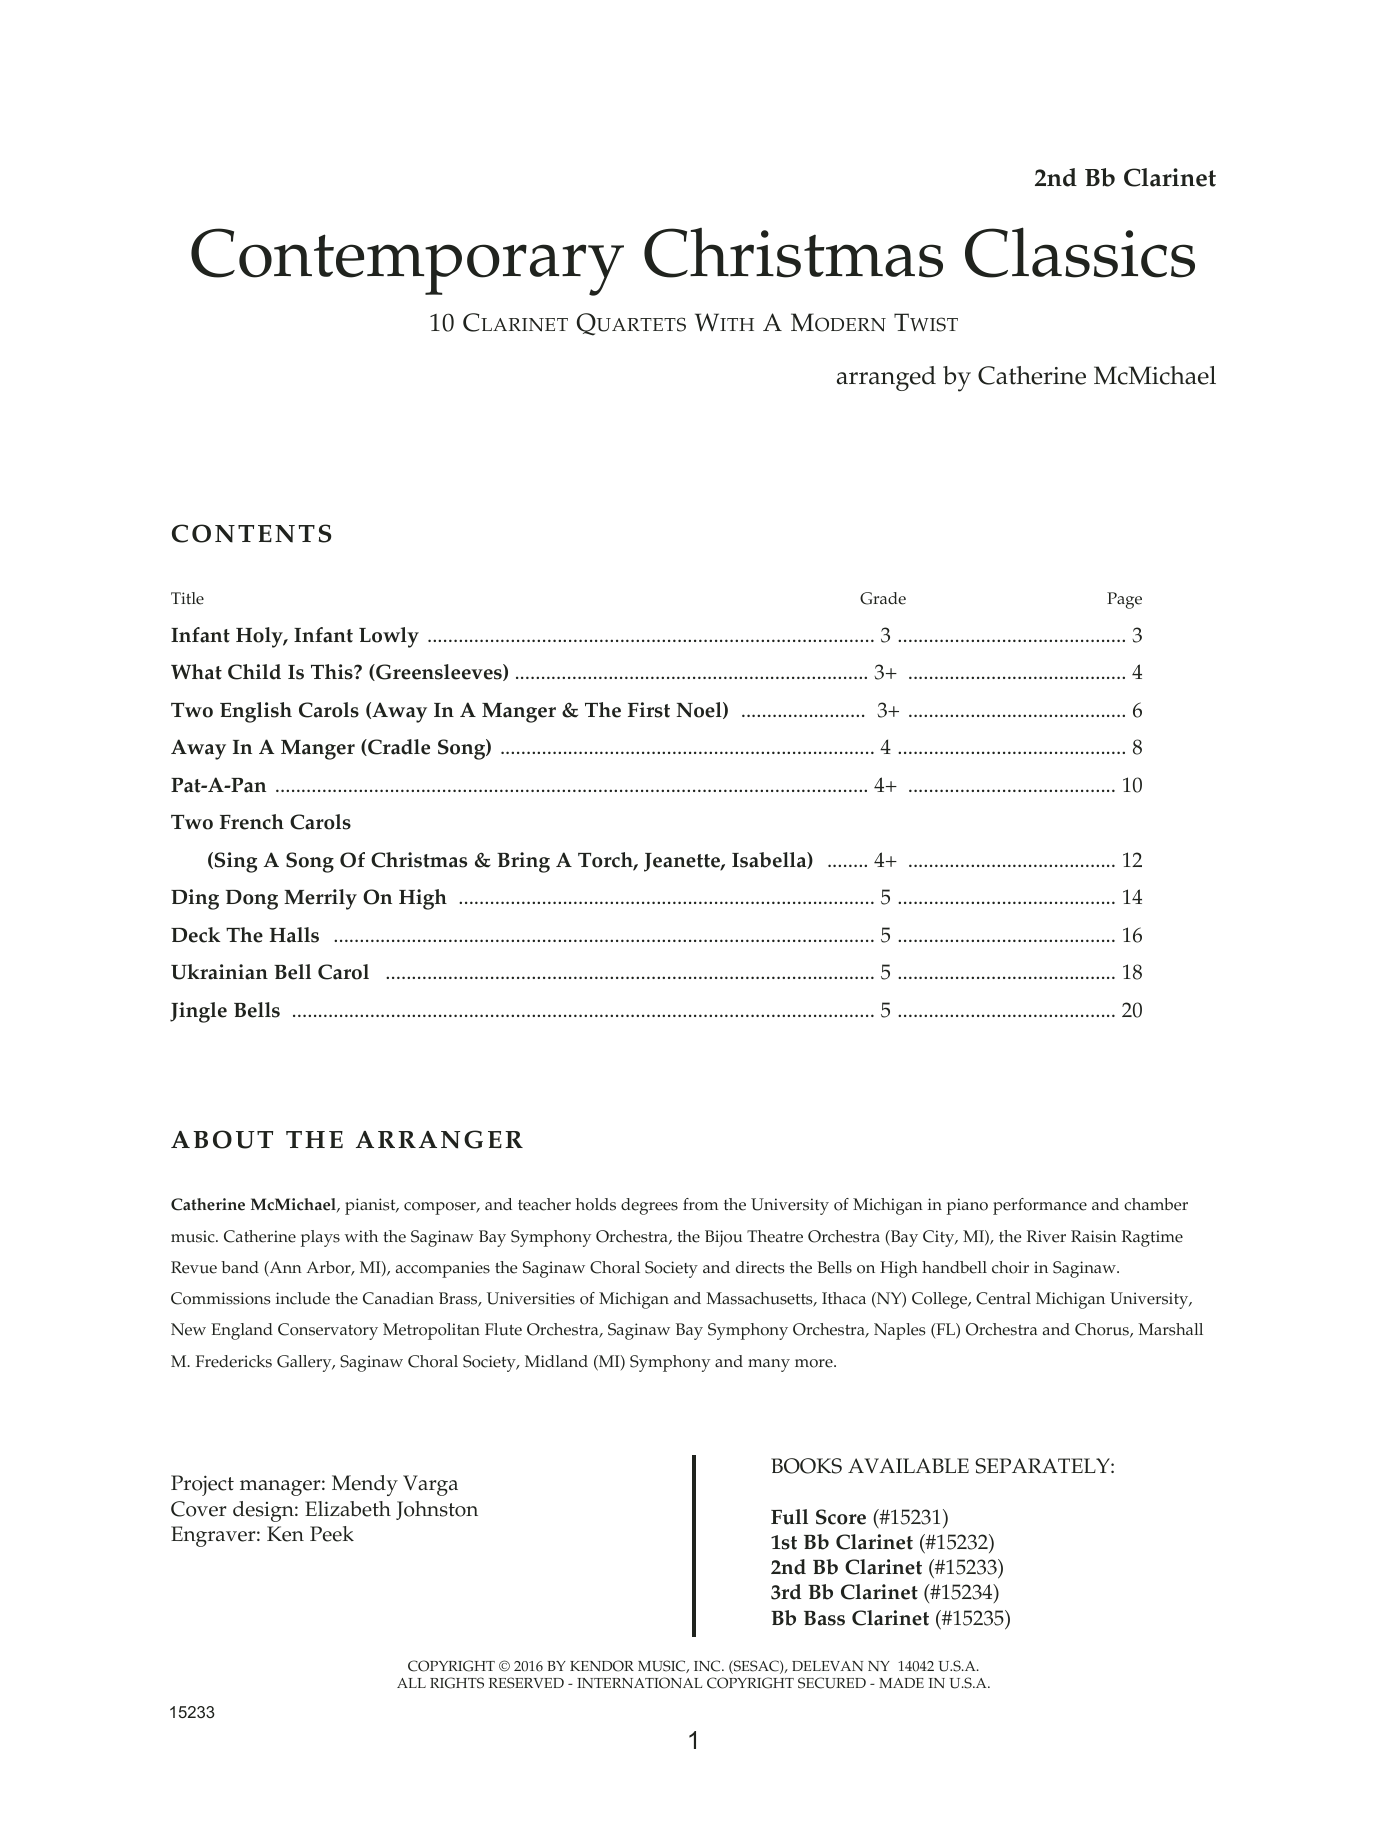 Contemporary Christmas Classics - 2nd Bb Clarinet sheet music